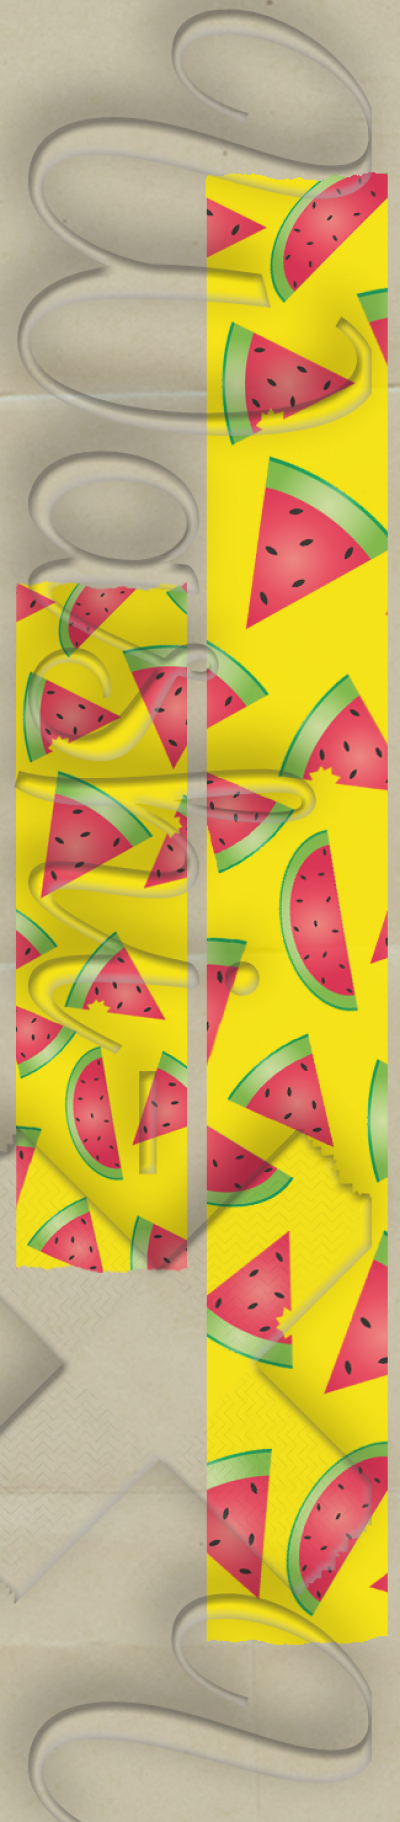 Watermelon patterned washi tape style 1